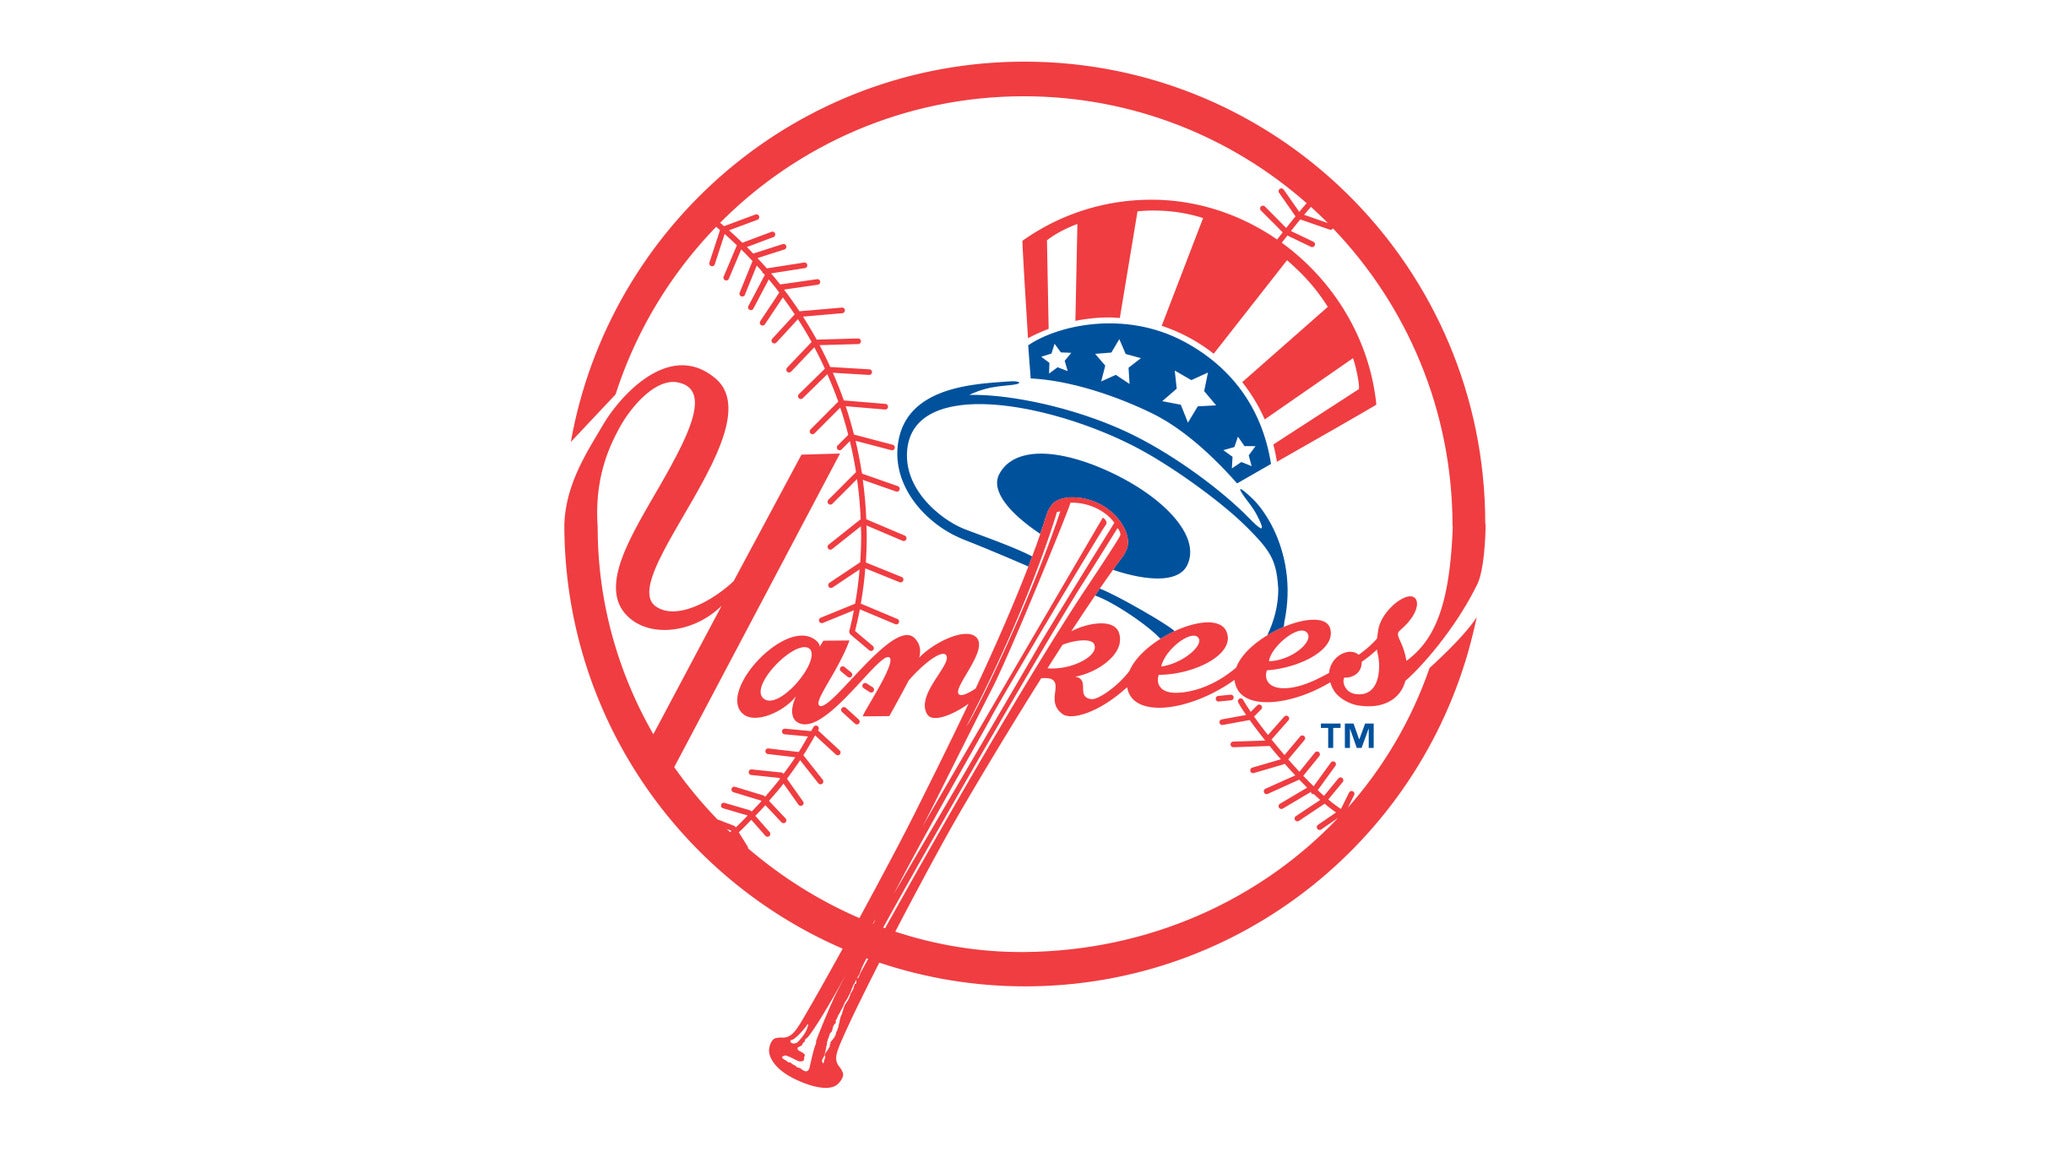 New York Yankees v. Texas Rangers * Premium Seating